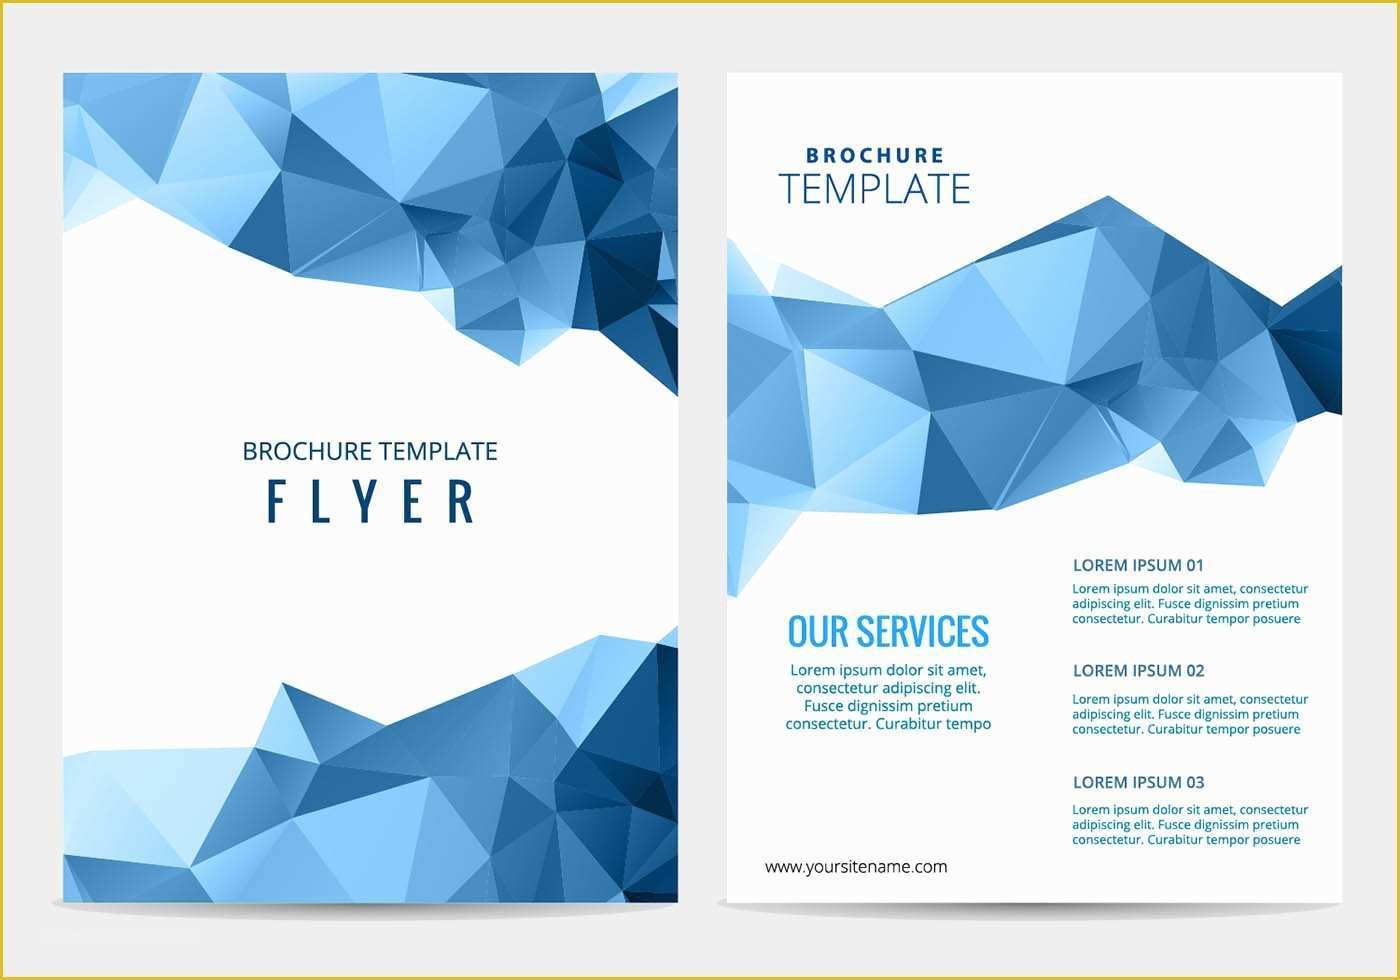 Free Simple Brochure Templates Of Vector Business Brochure Download Free Vector Art Stock